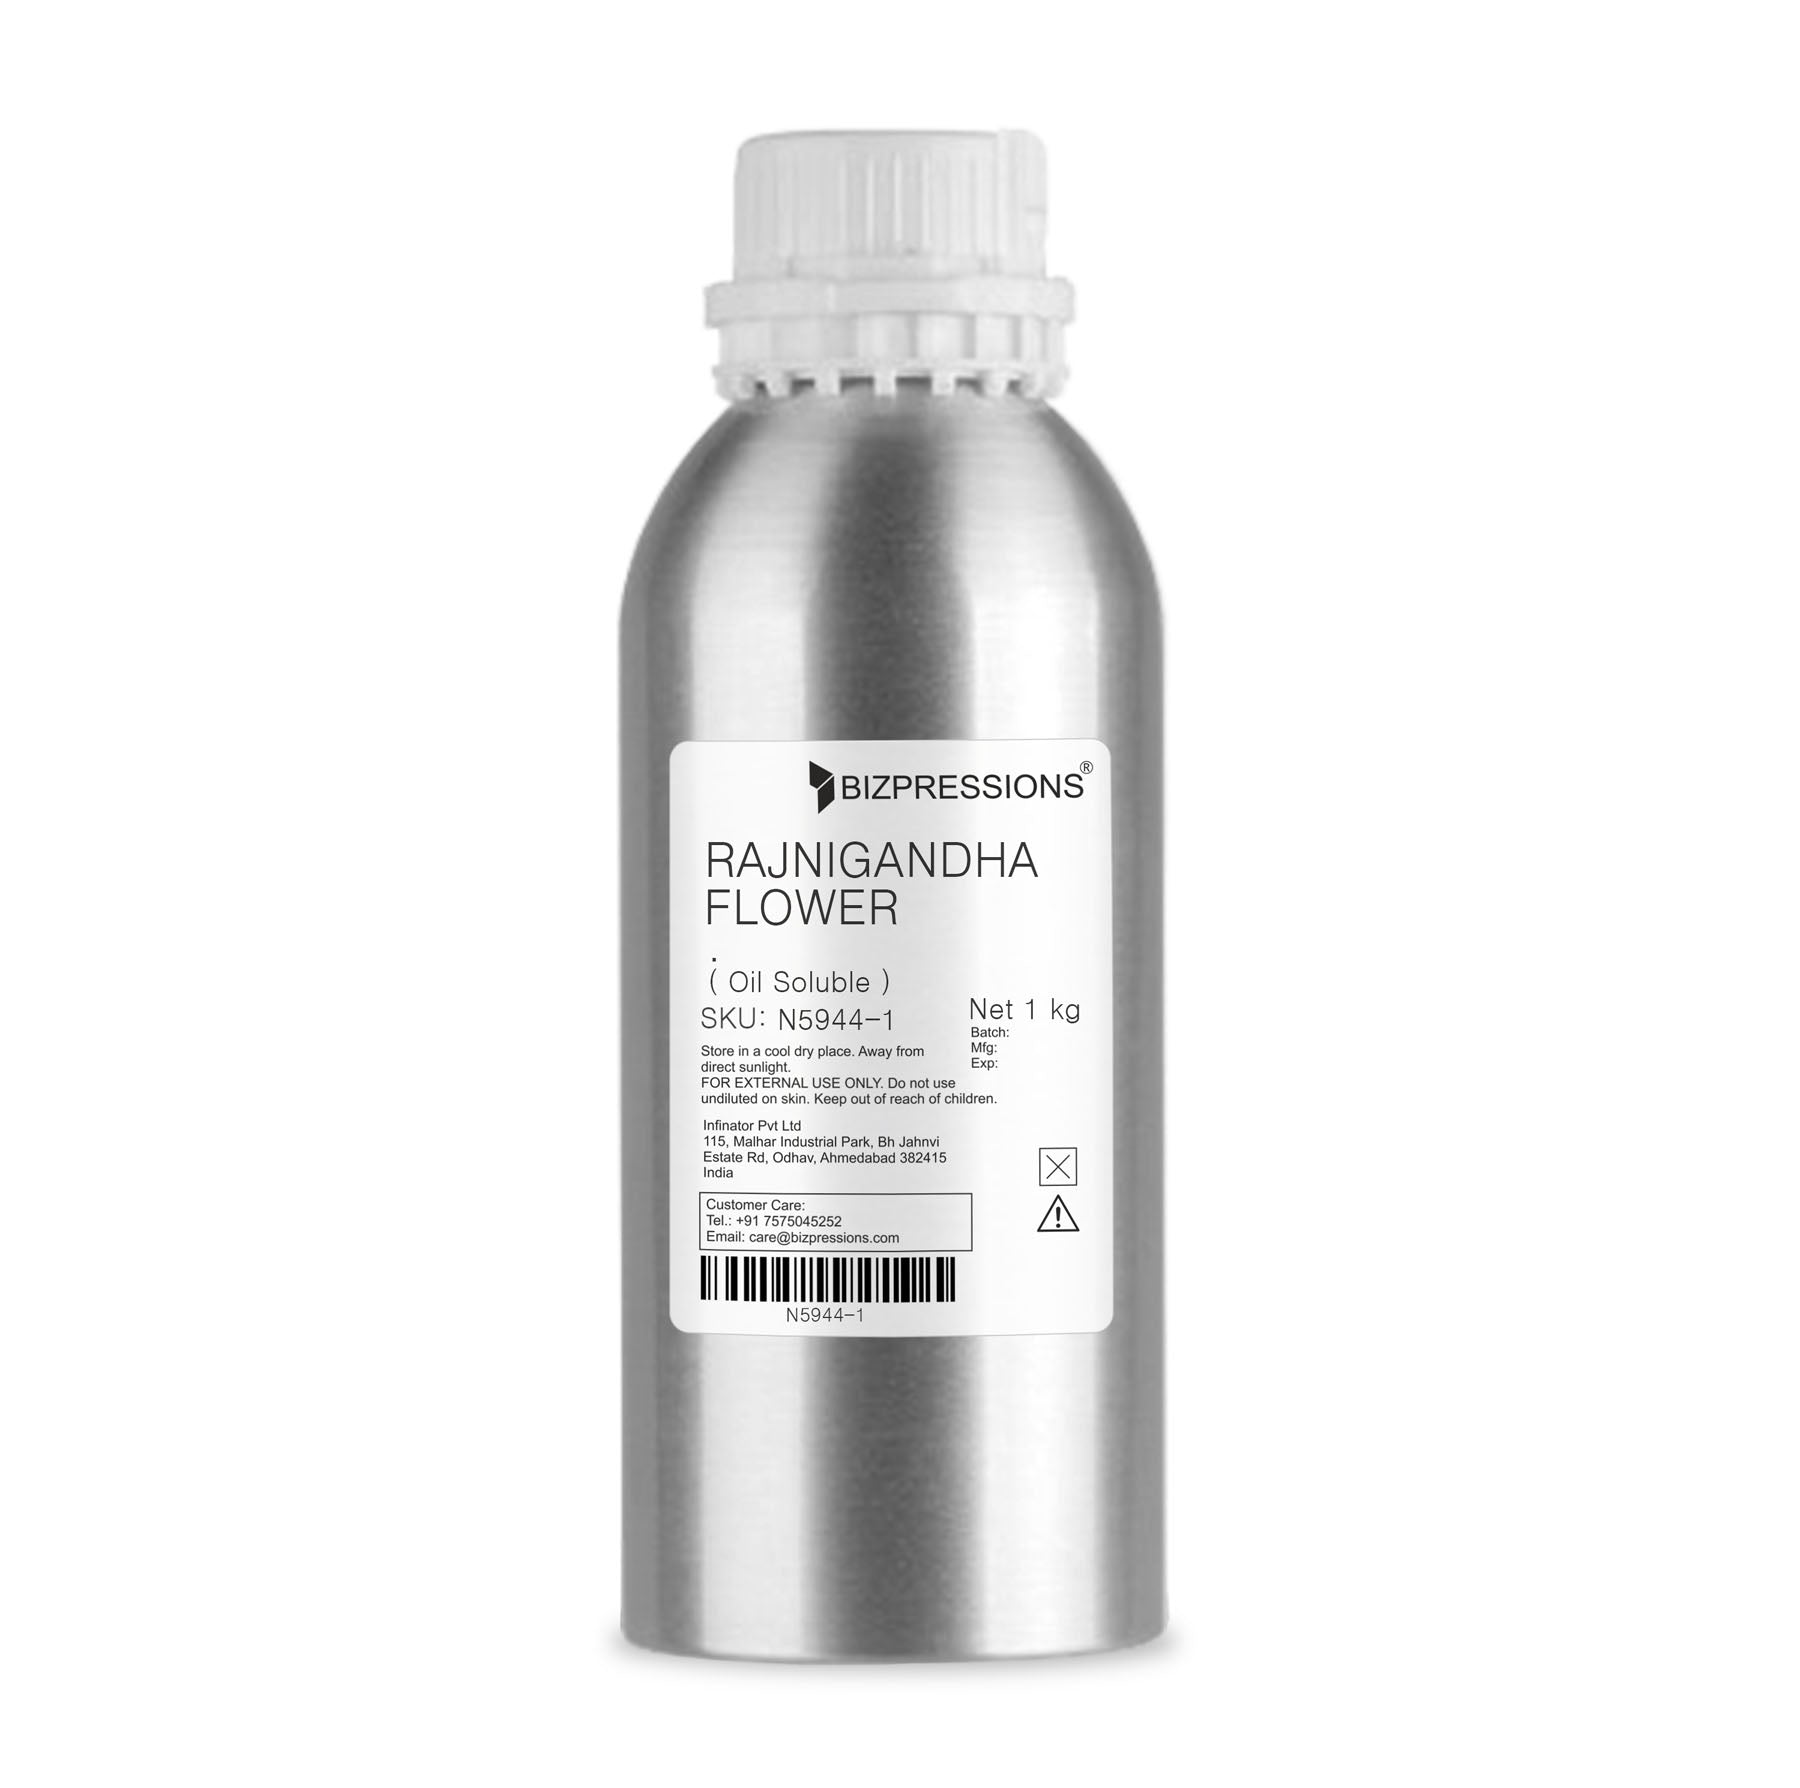 RAJNIGANDHA FLOWER - Fragrance ( Oil Soluble ) - 1 kg